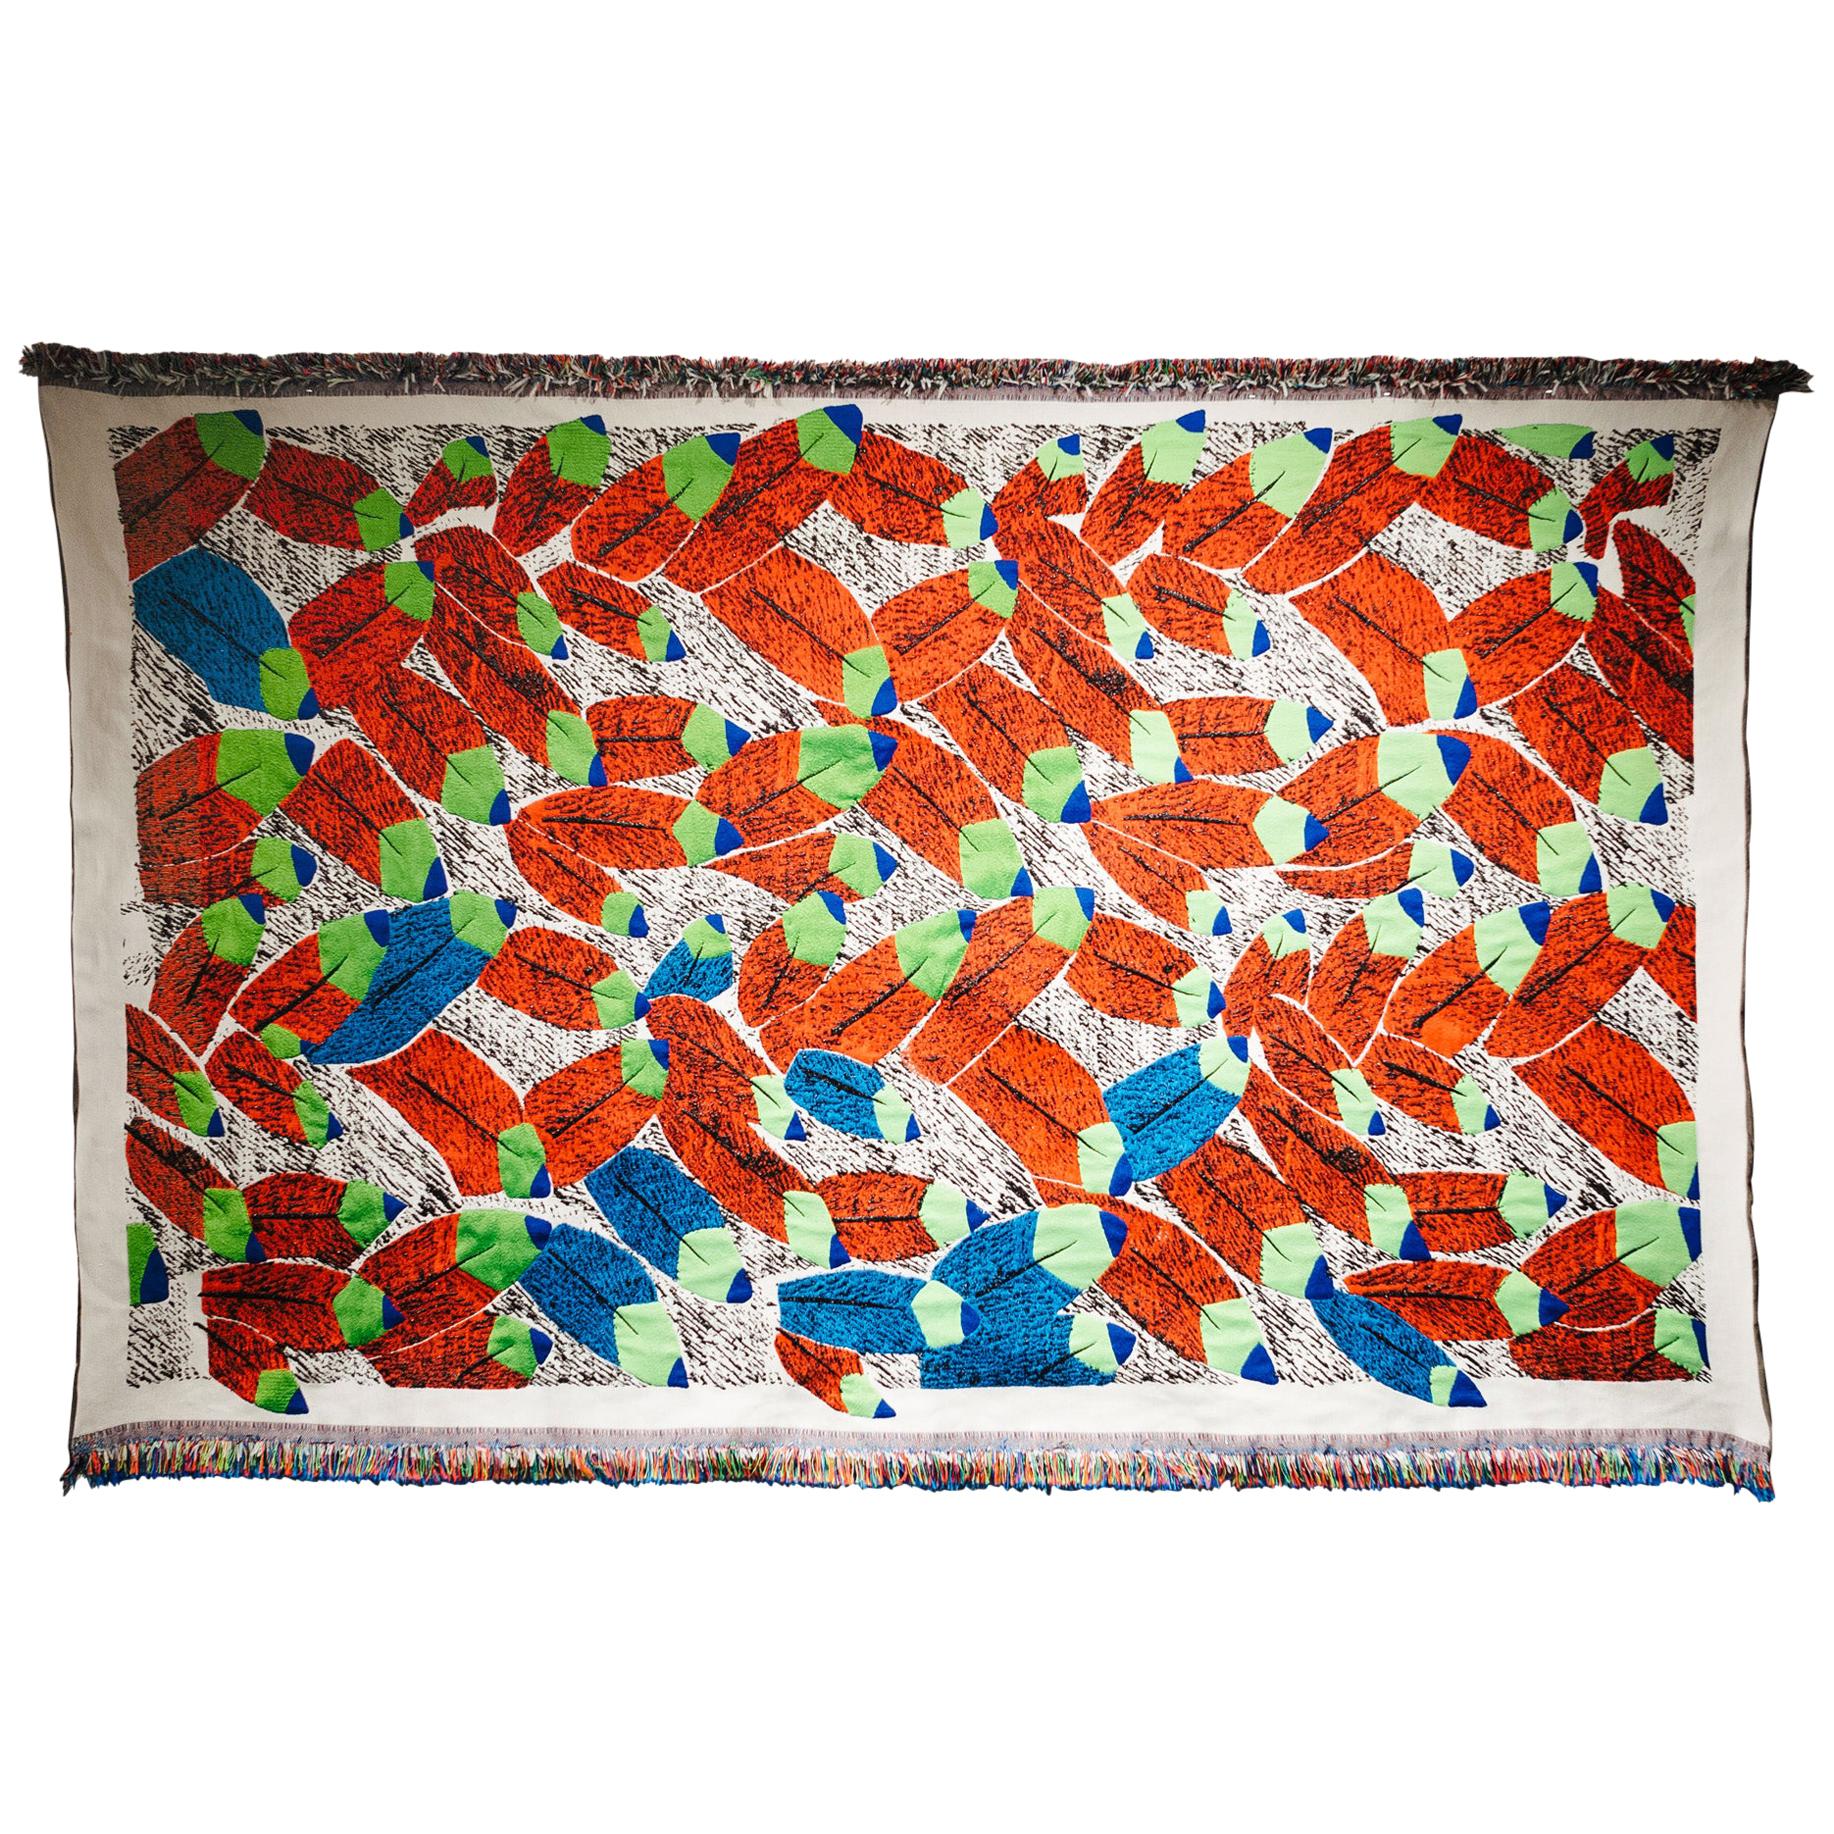 Ugo La Pietra Artificial Nature #6 Recycled Fibers Tapestry